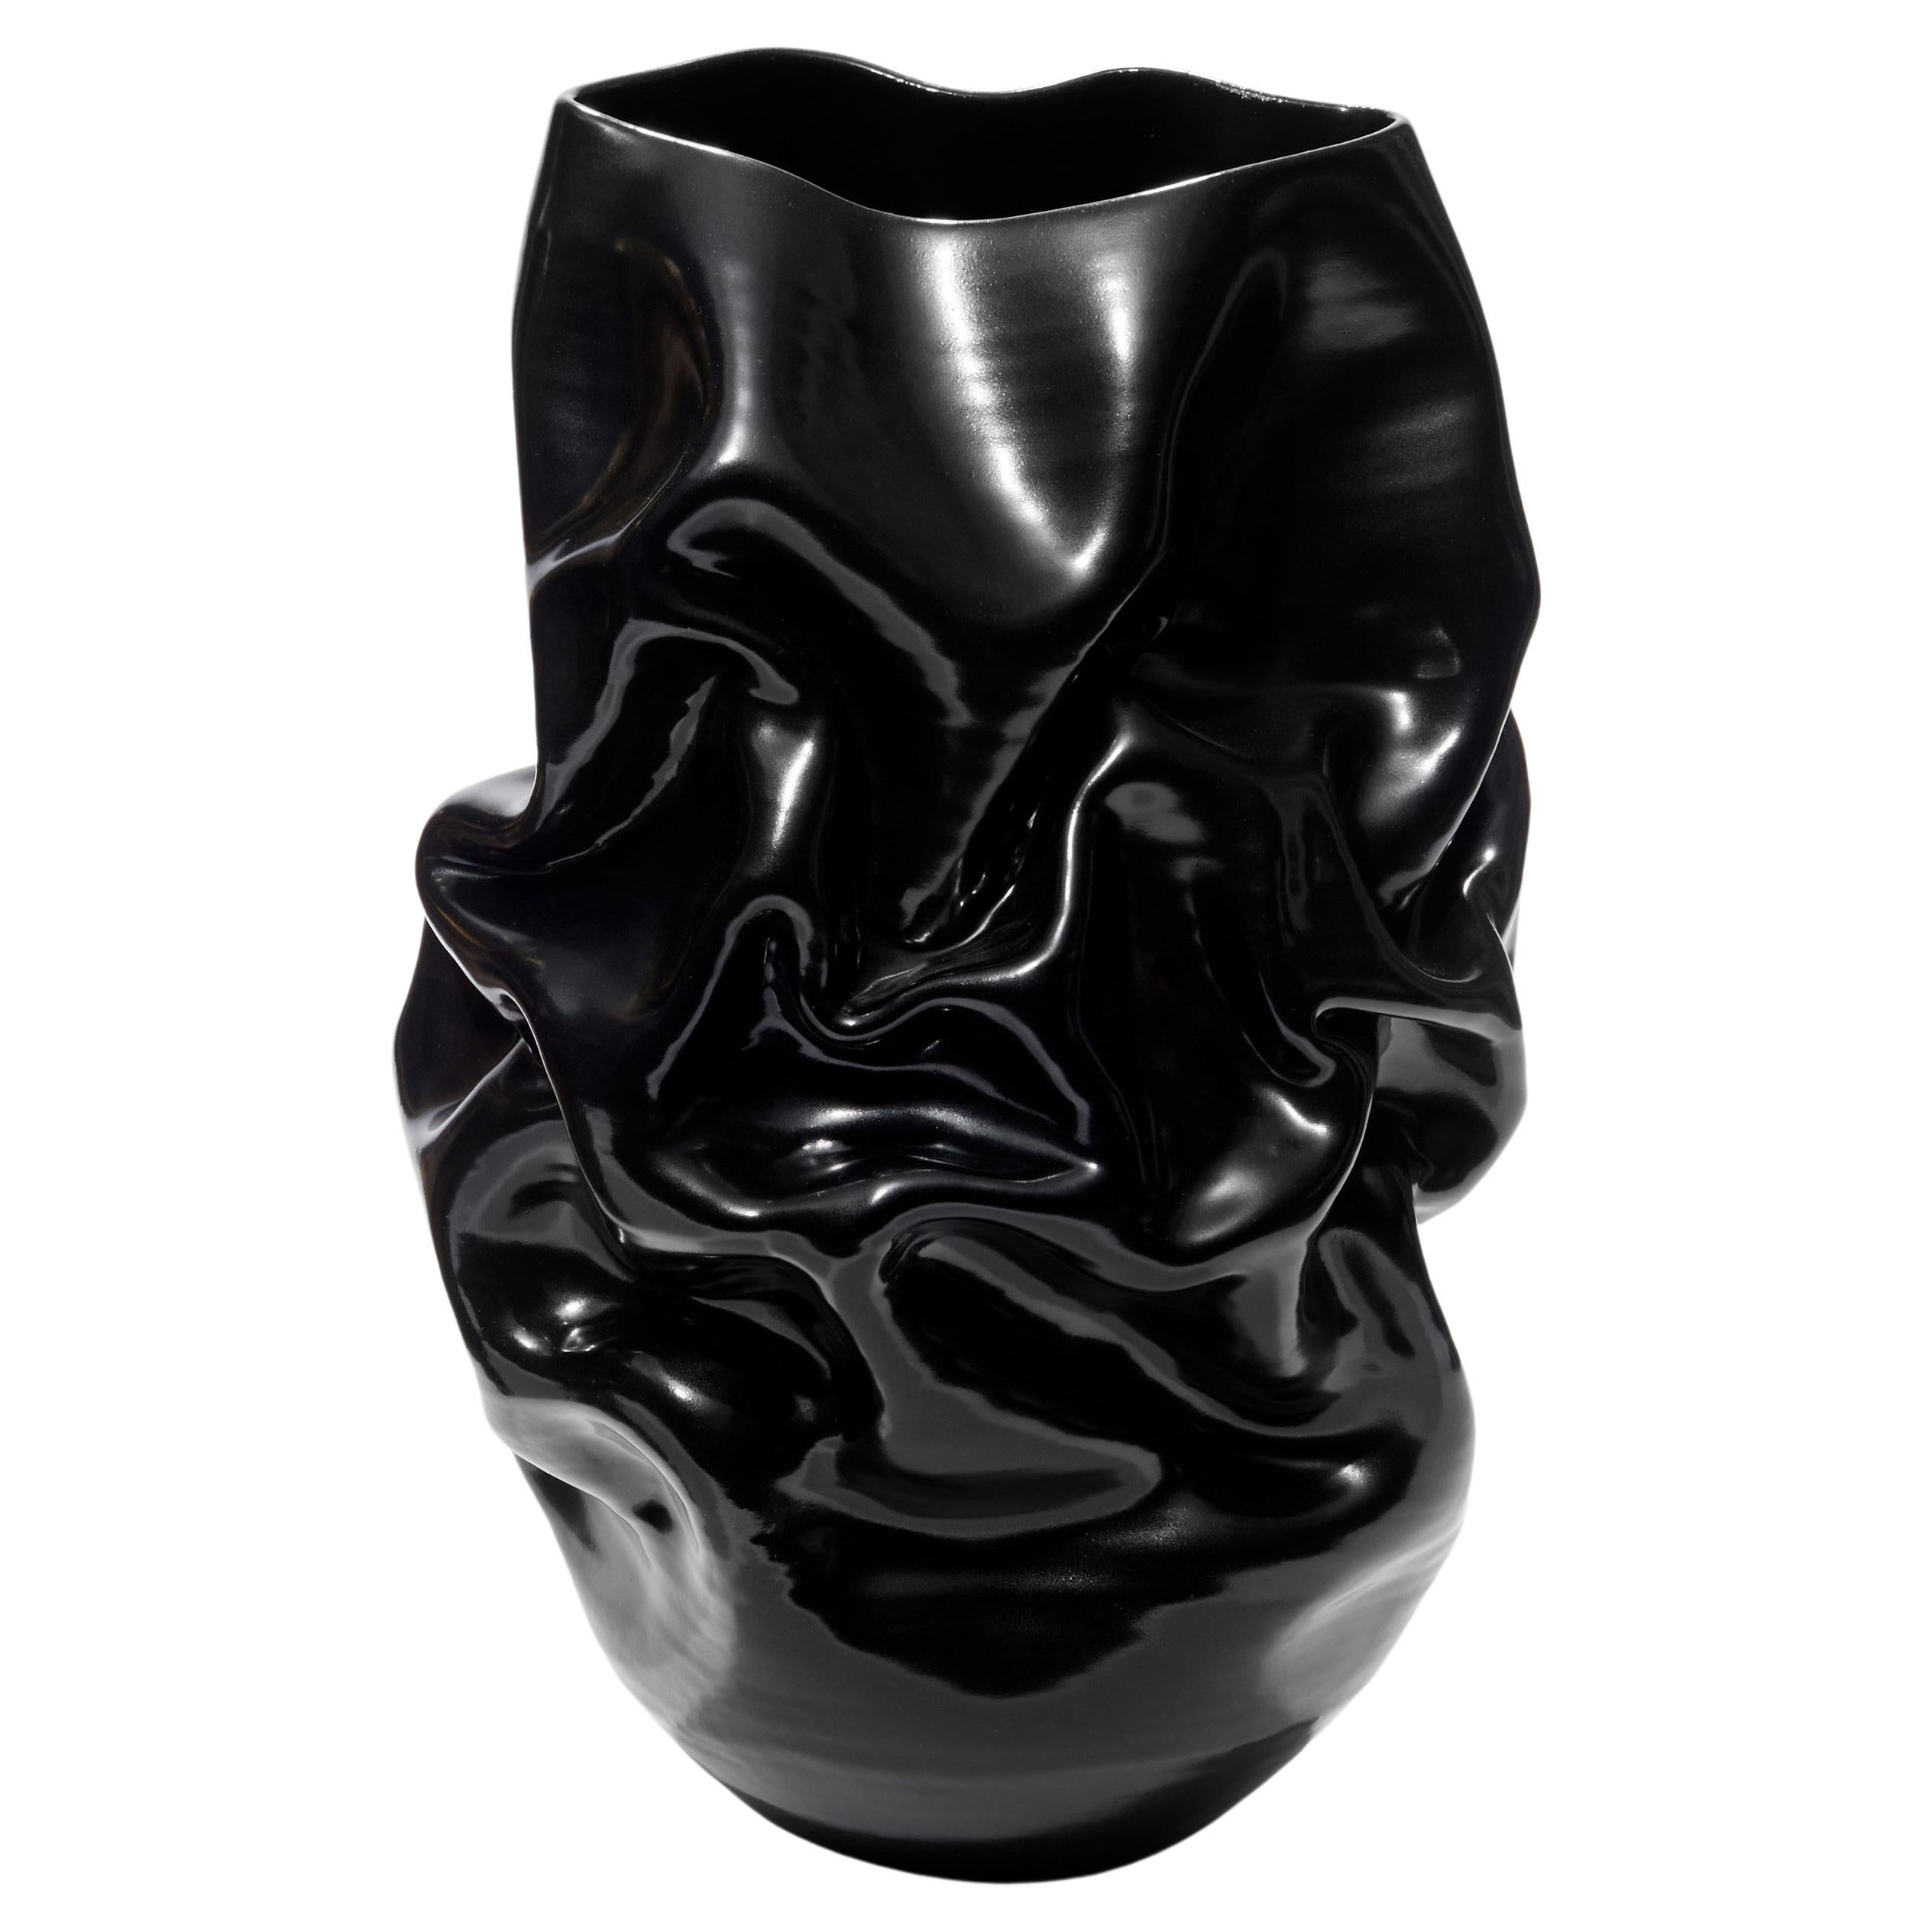  Großes schwarzes Keramikgefäß in zerknitterter Form Nr. 94 von Nicholas Arroyave-Portela